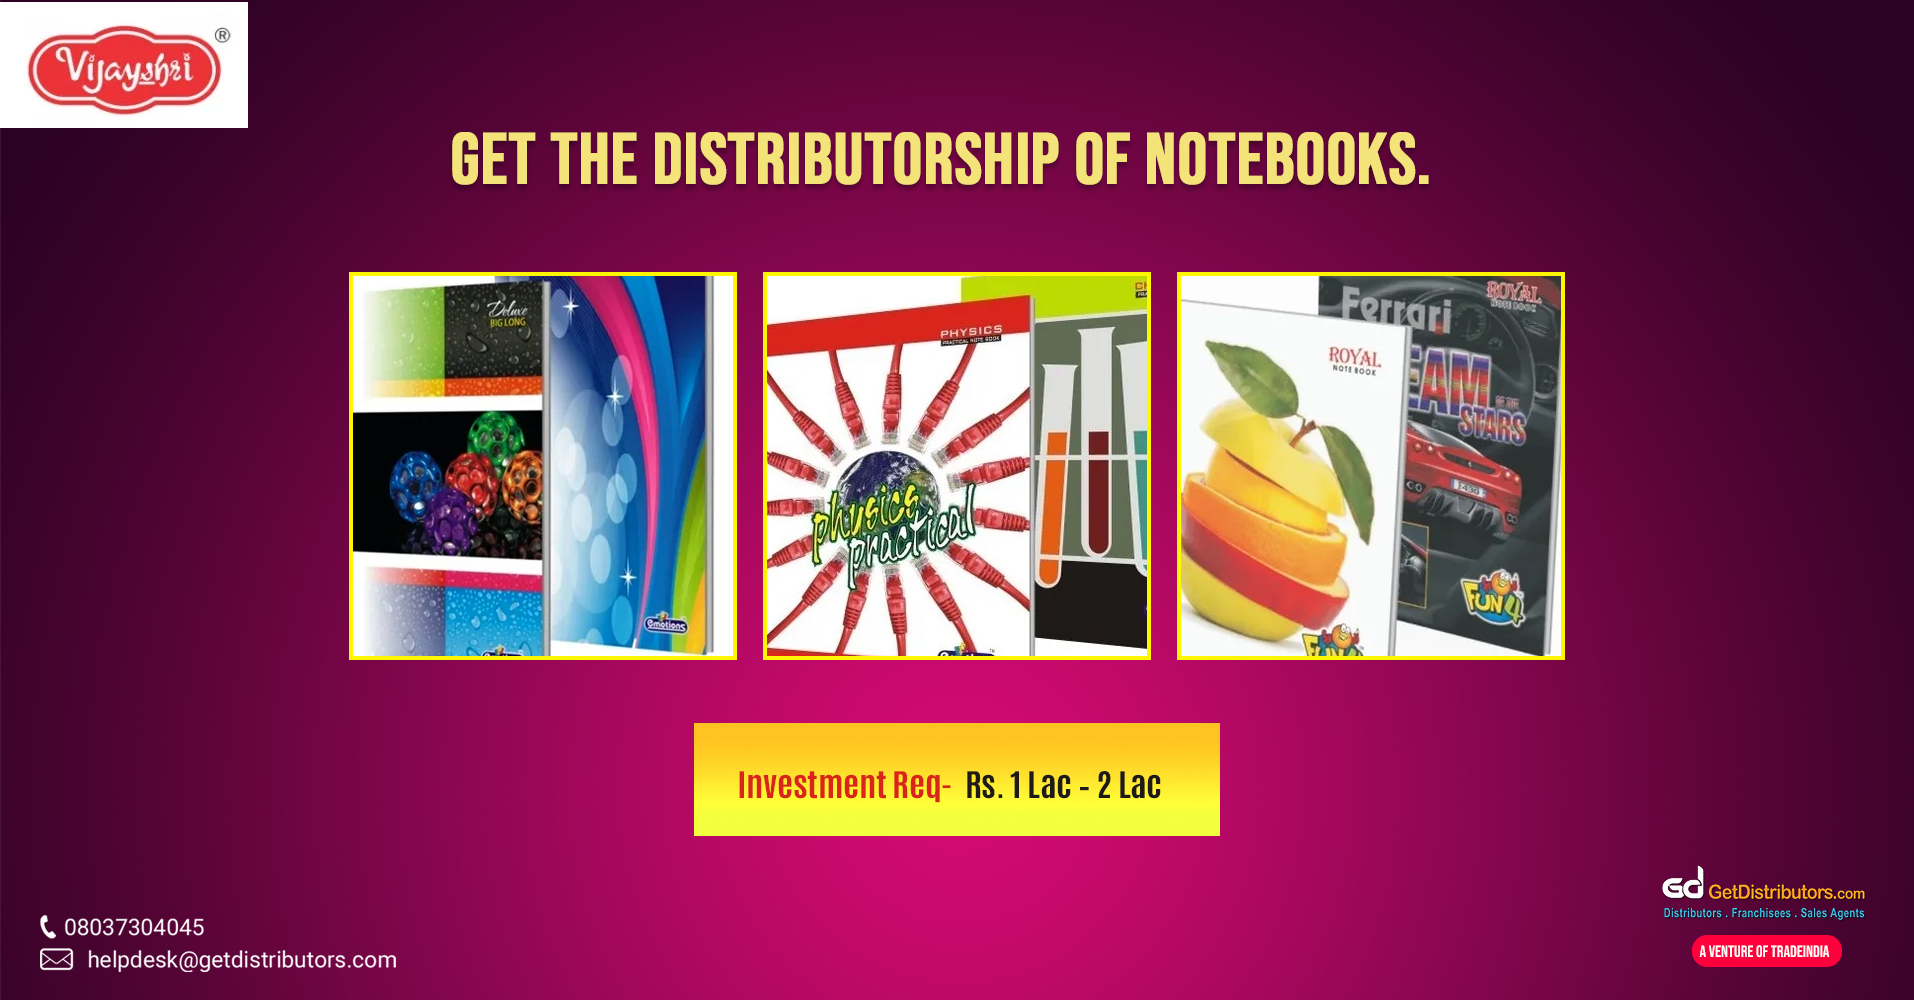 Vijayshri Note Books Private Limited